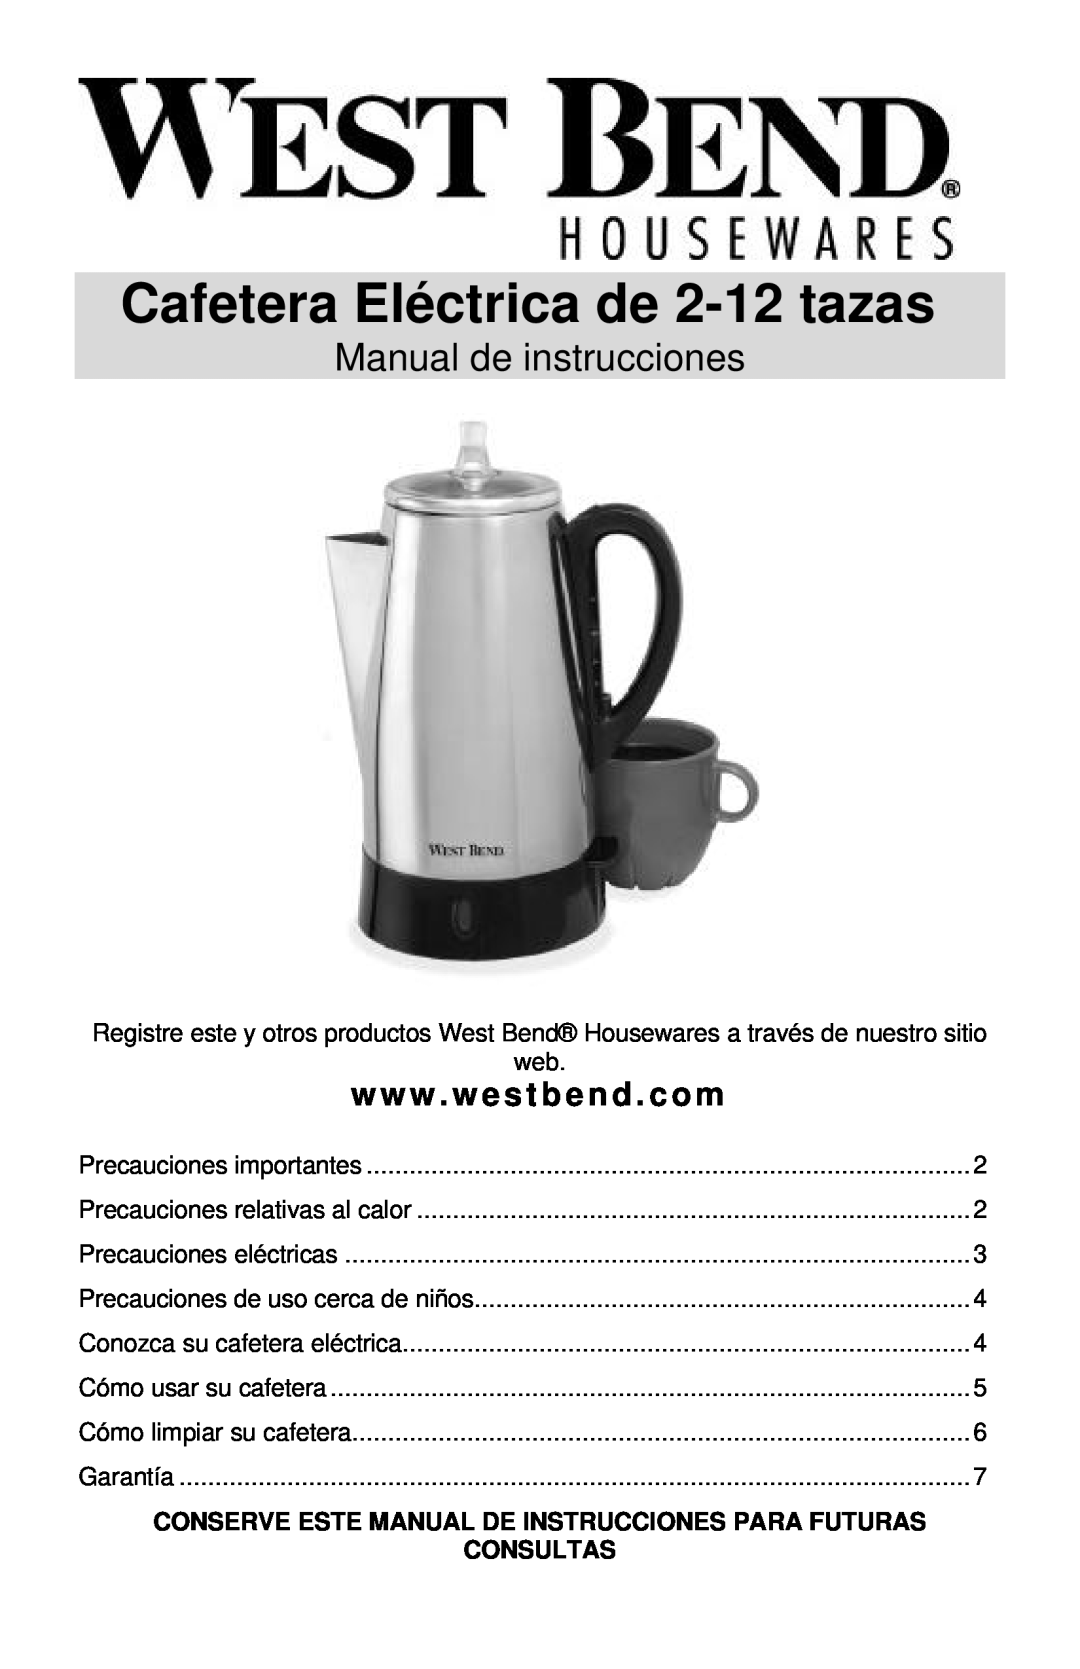 West Bend Coffeemaker manual Cafetera Eléctrica de 2 -12 tazas, Manual de instrucciones, w w w . w e s t b e n d . c o m 